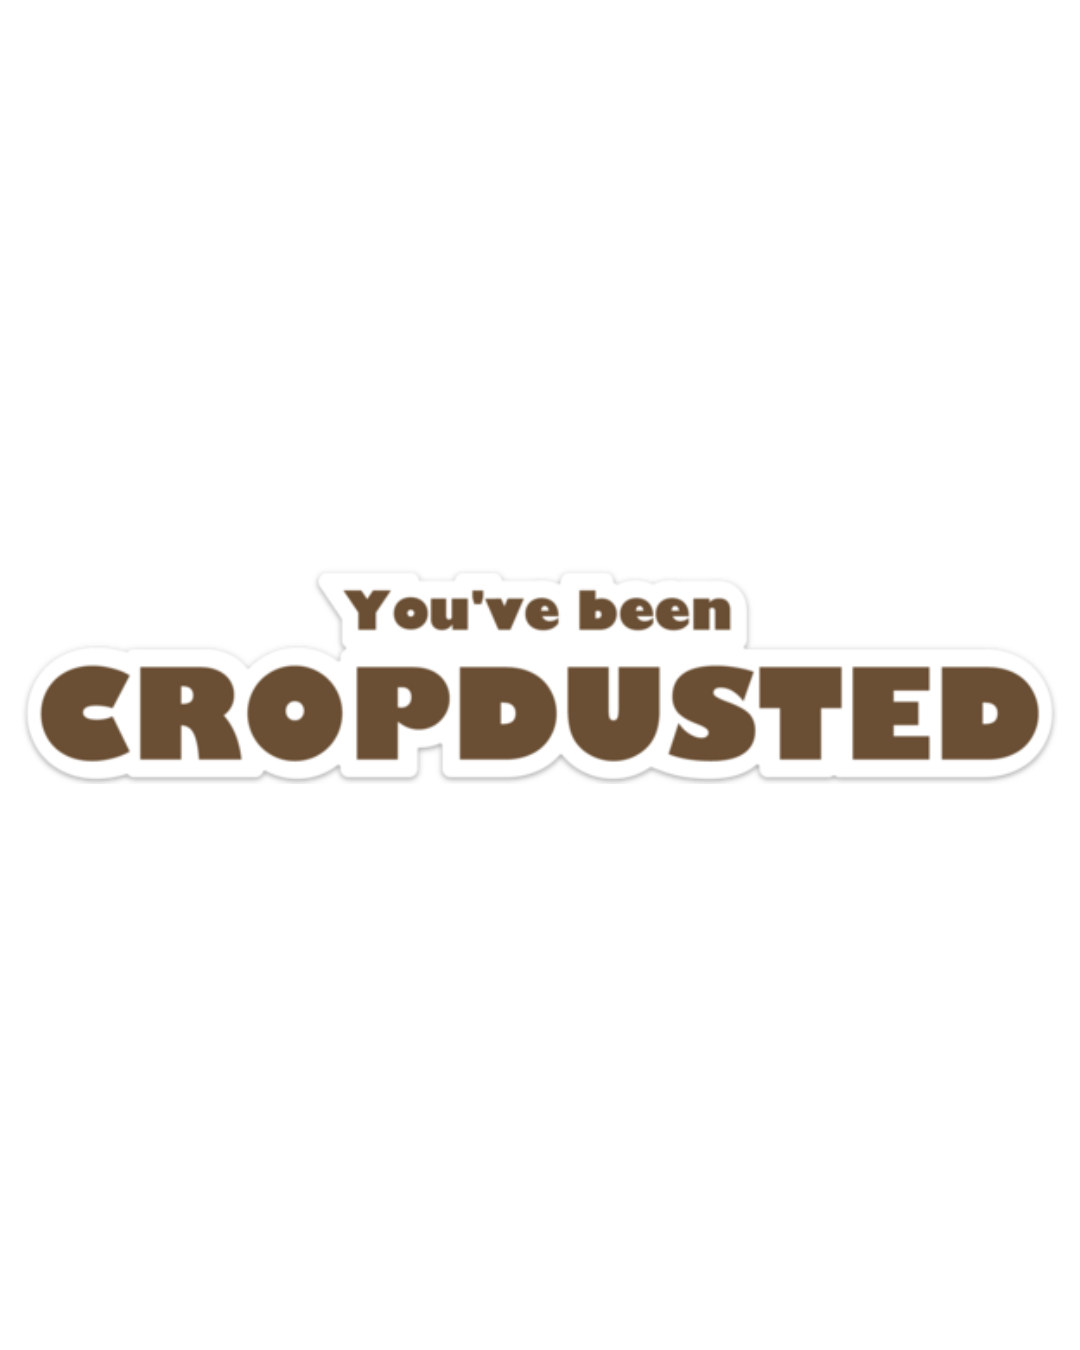 Cropdusted Bumper Sticker